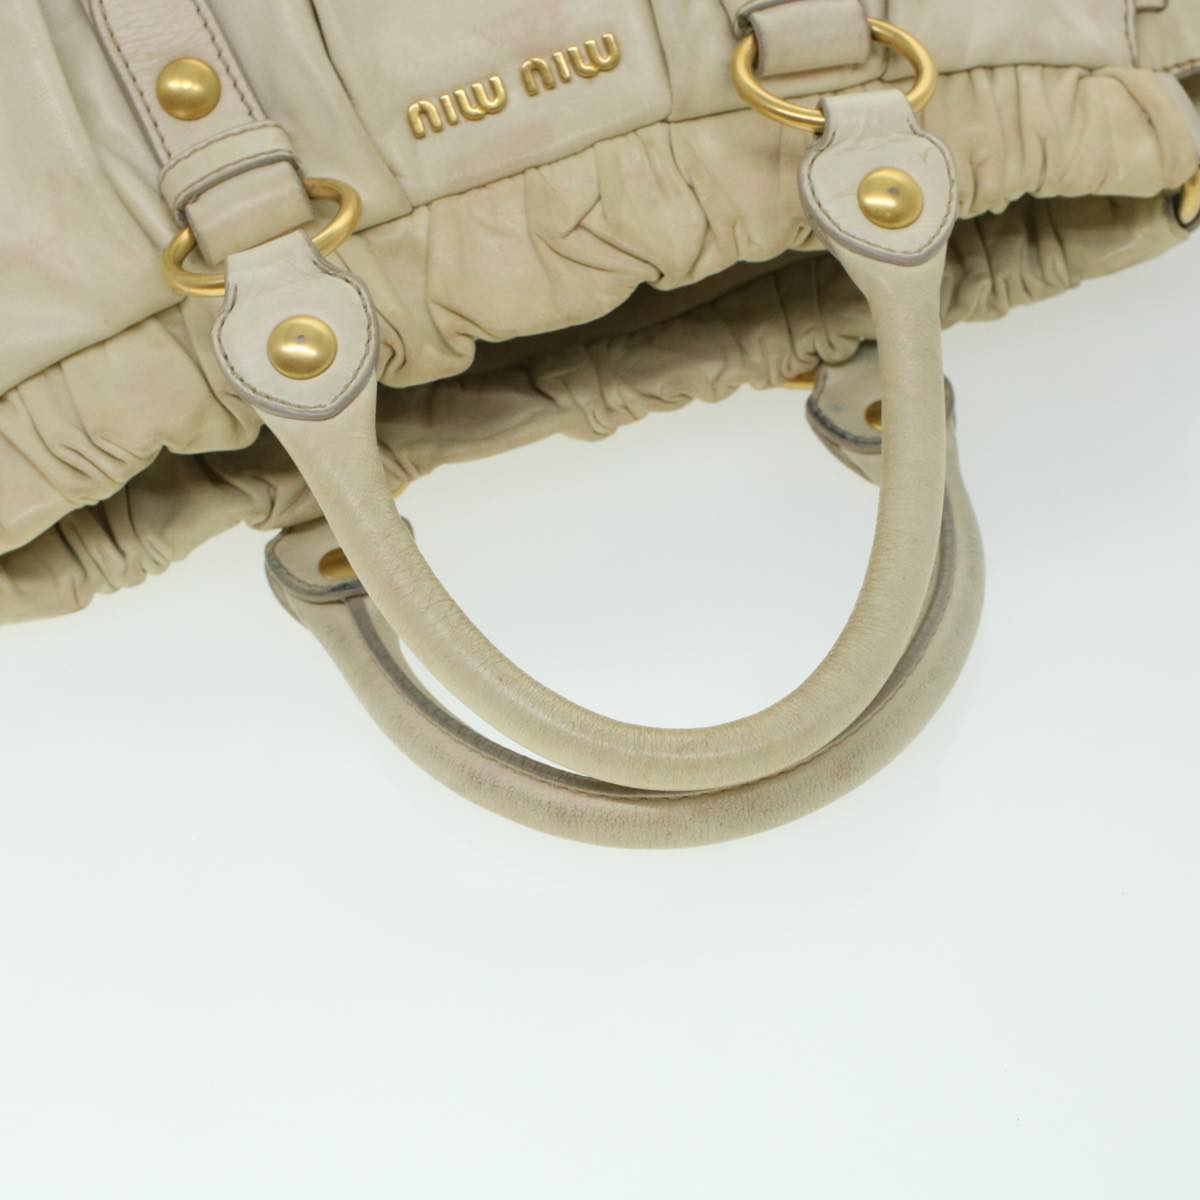 Miu Miu Hand Bag Leather 2way Beige Auth yk6957